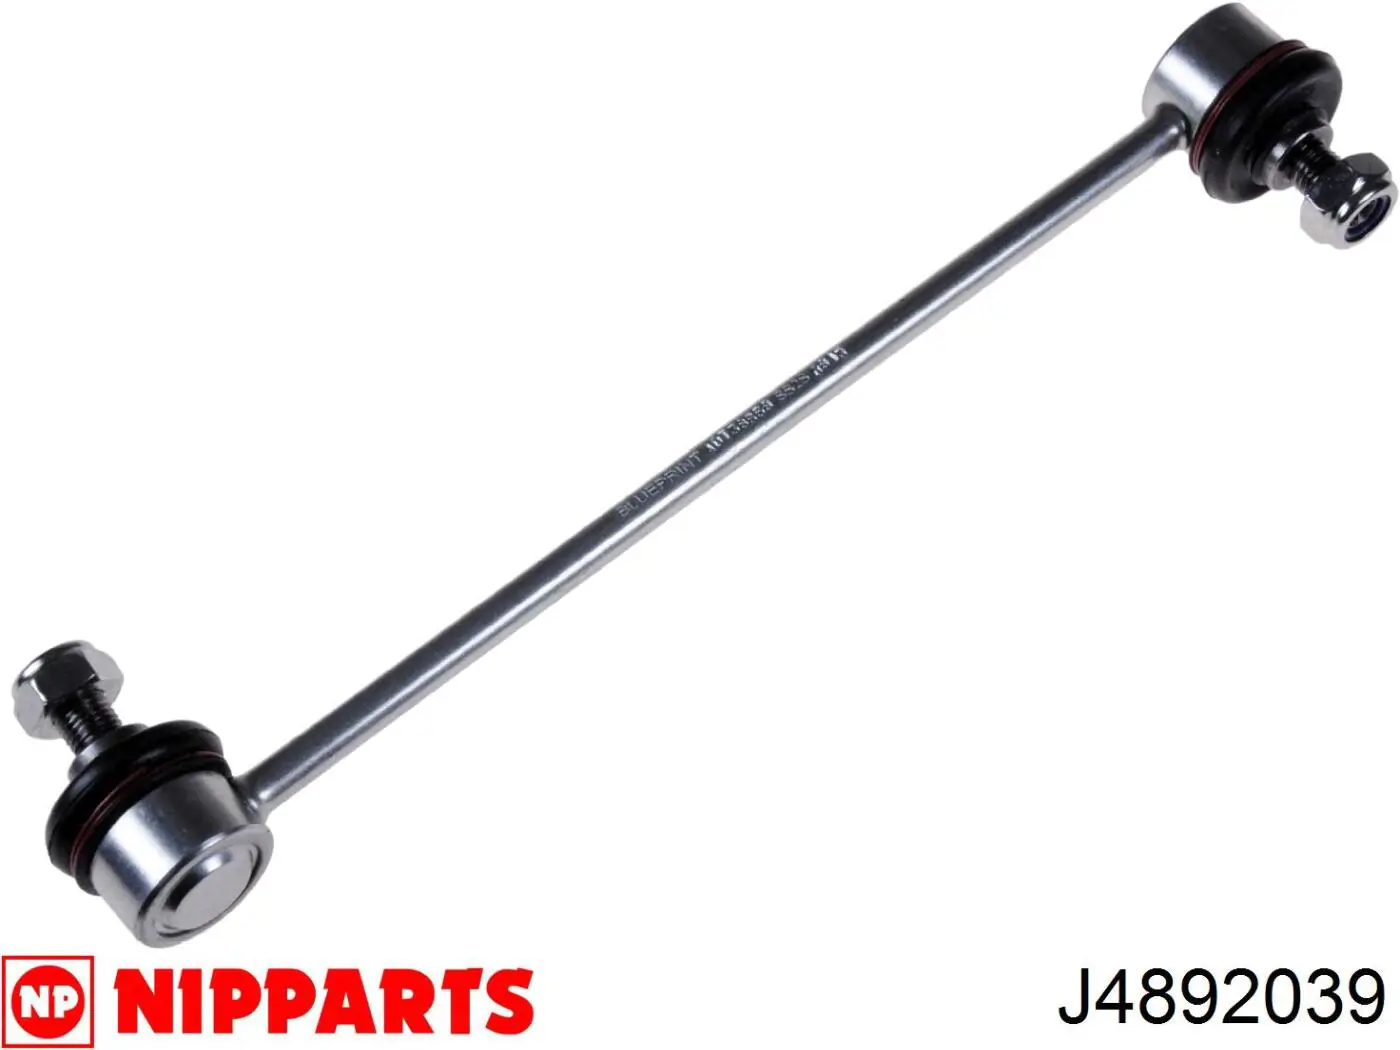 J4892039 Nipparts soporte de barra estabilizadora trasera